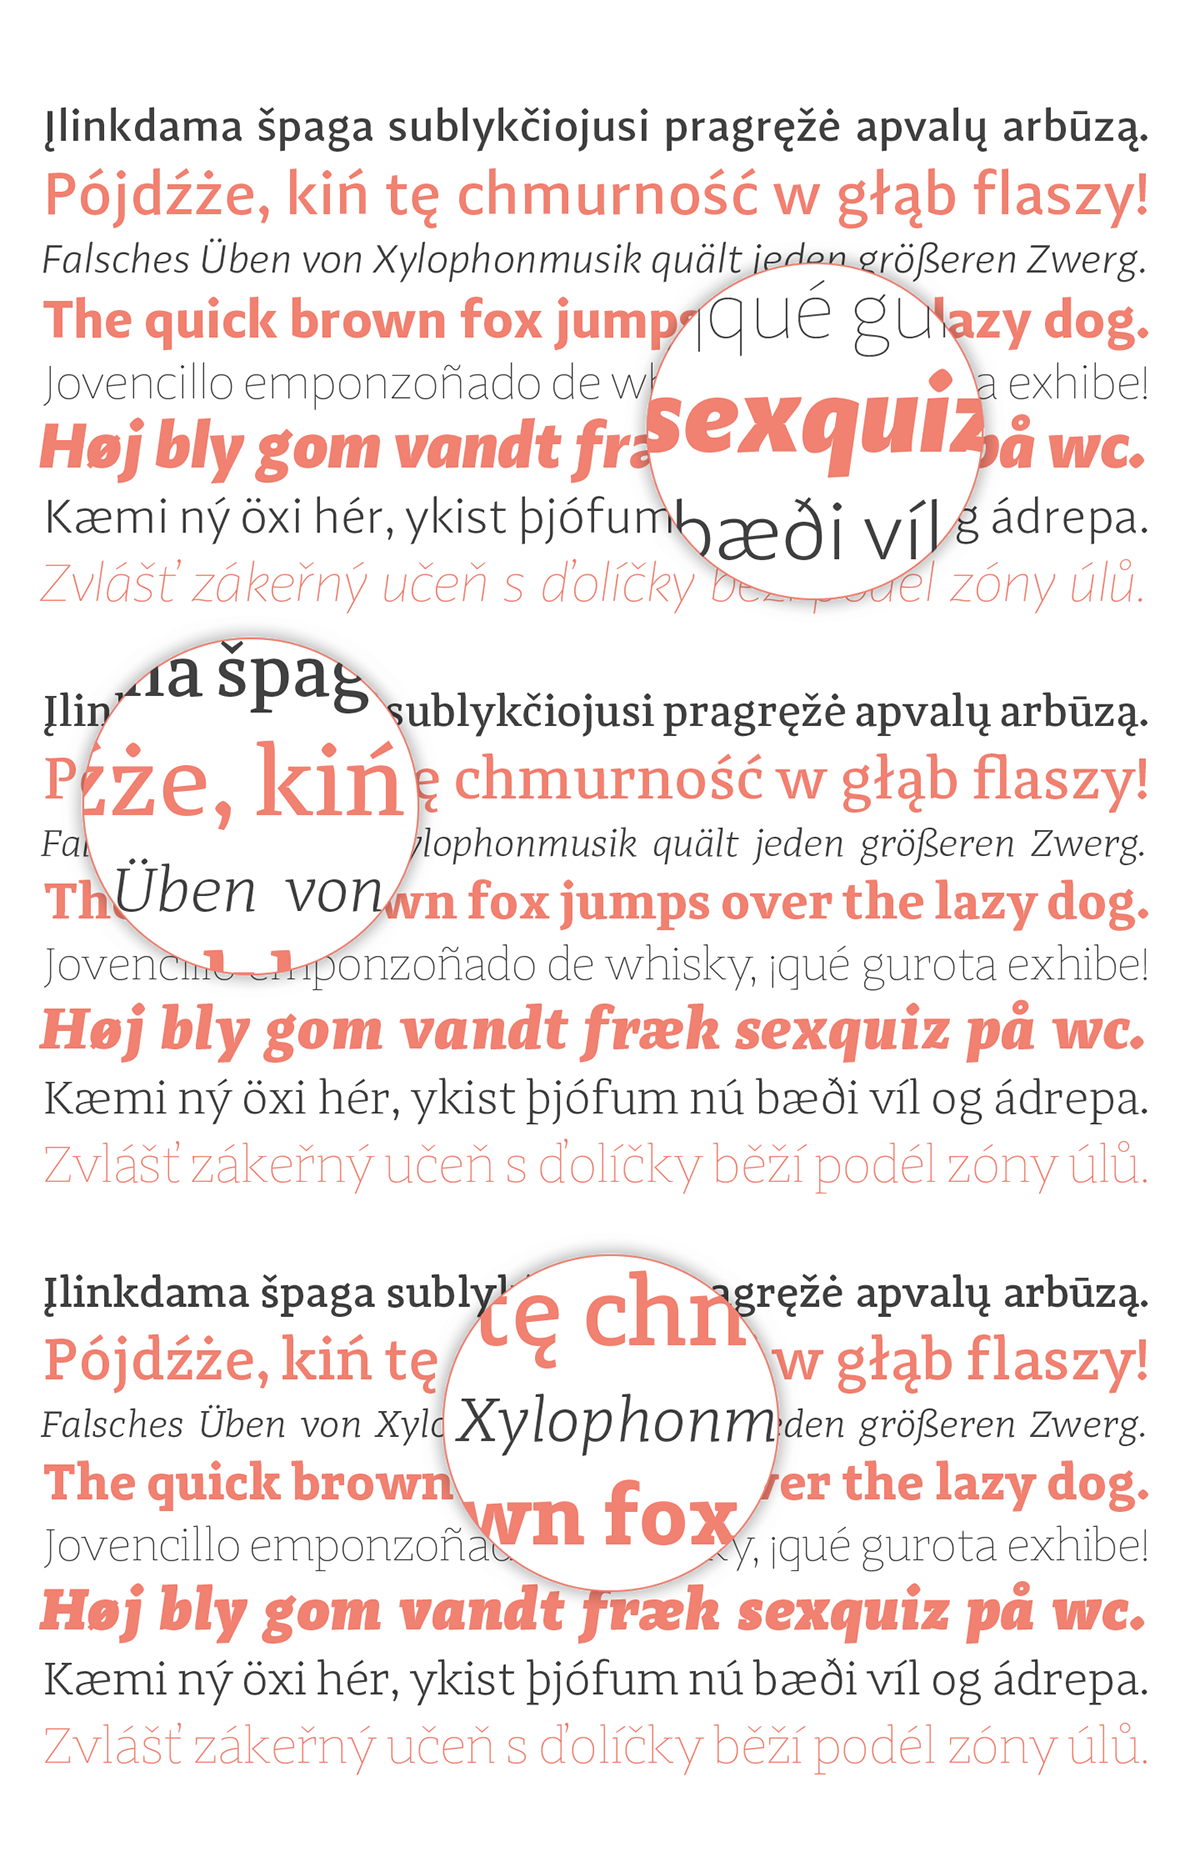 MACHALSKI borutta type design family font sans slab serif Gill Super Family typo ASP warsaw italics adagio